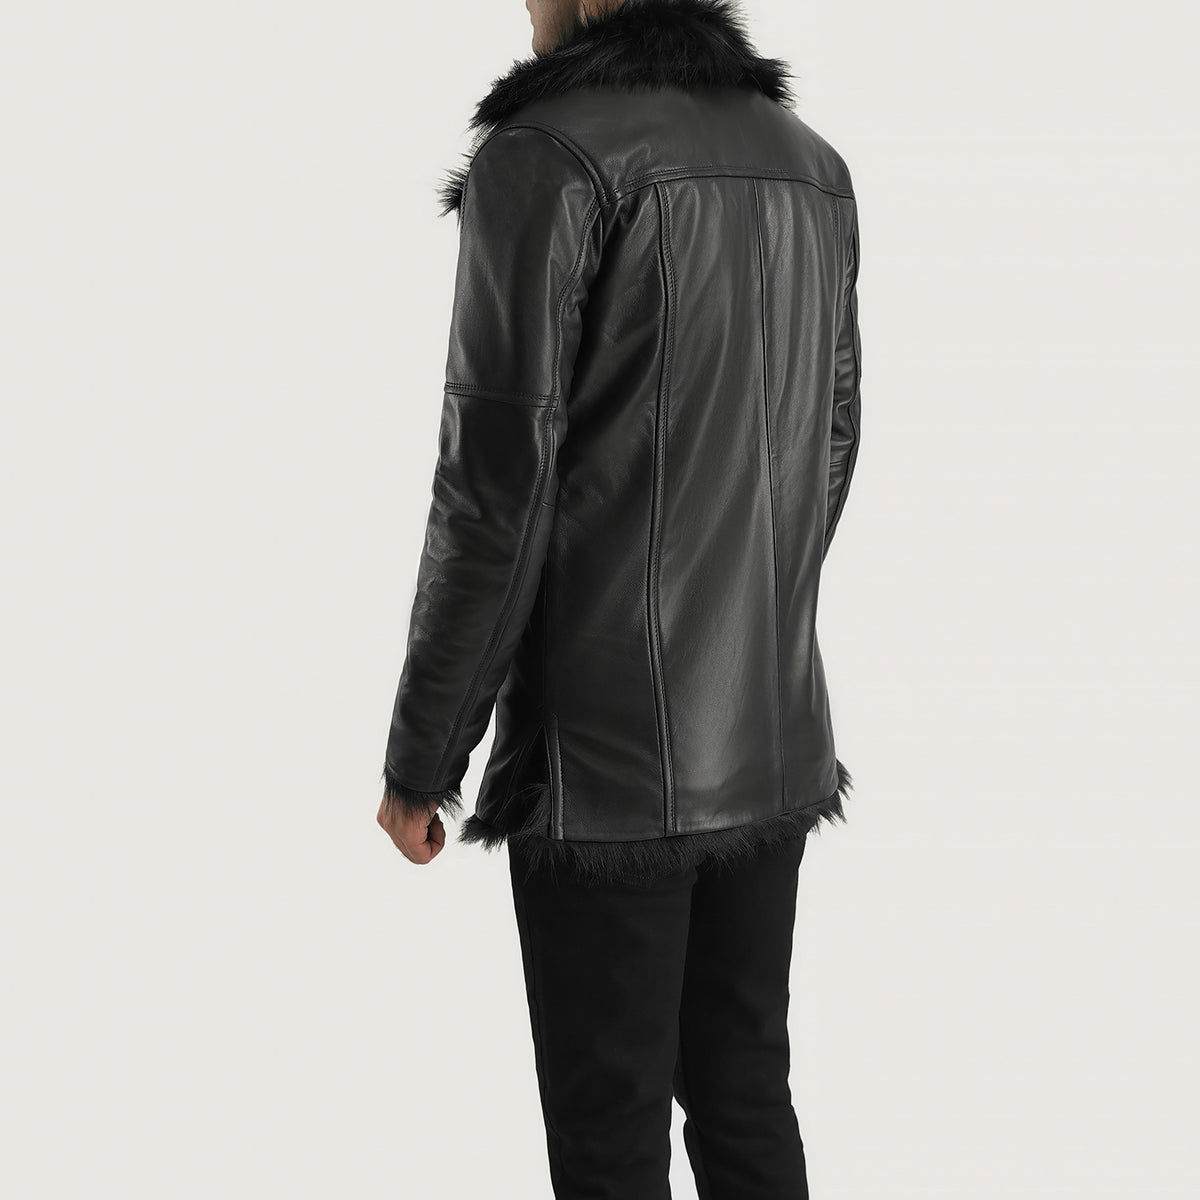 Furcliff Black Leather Coat